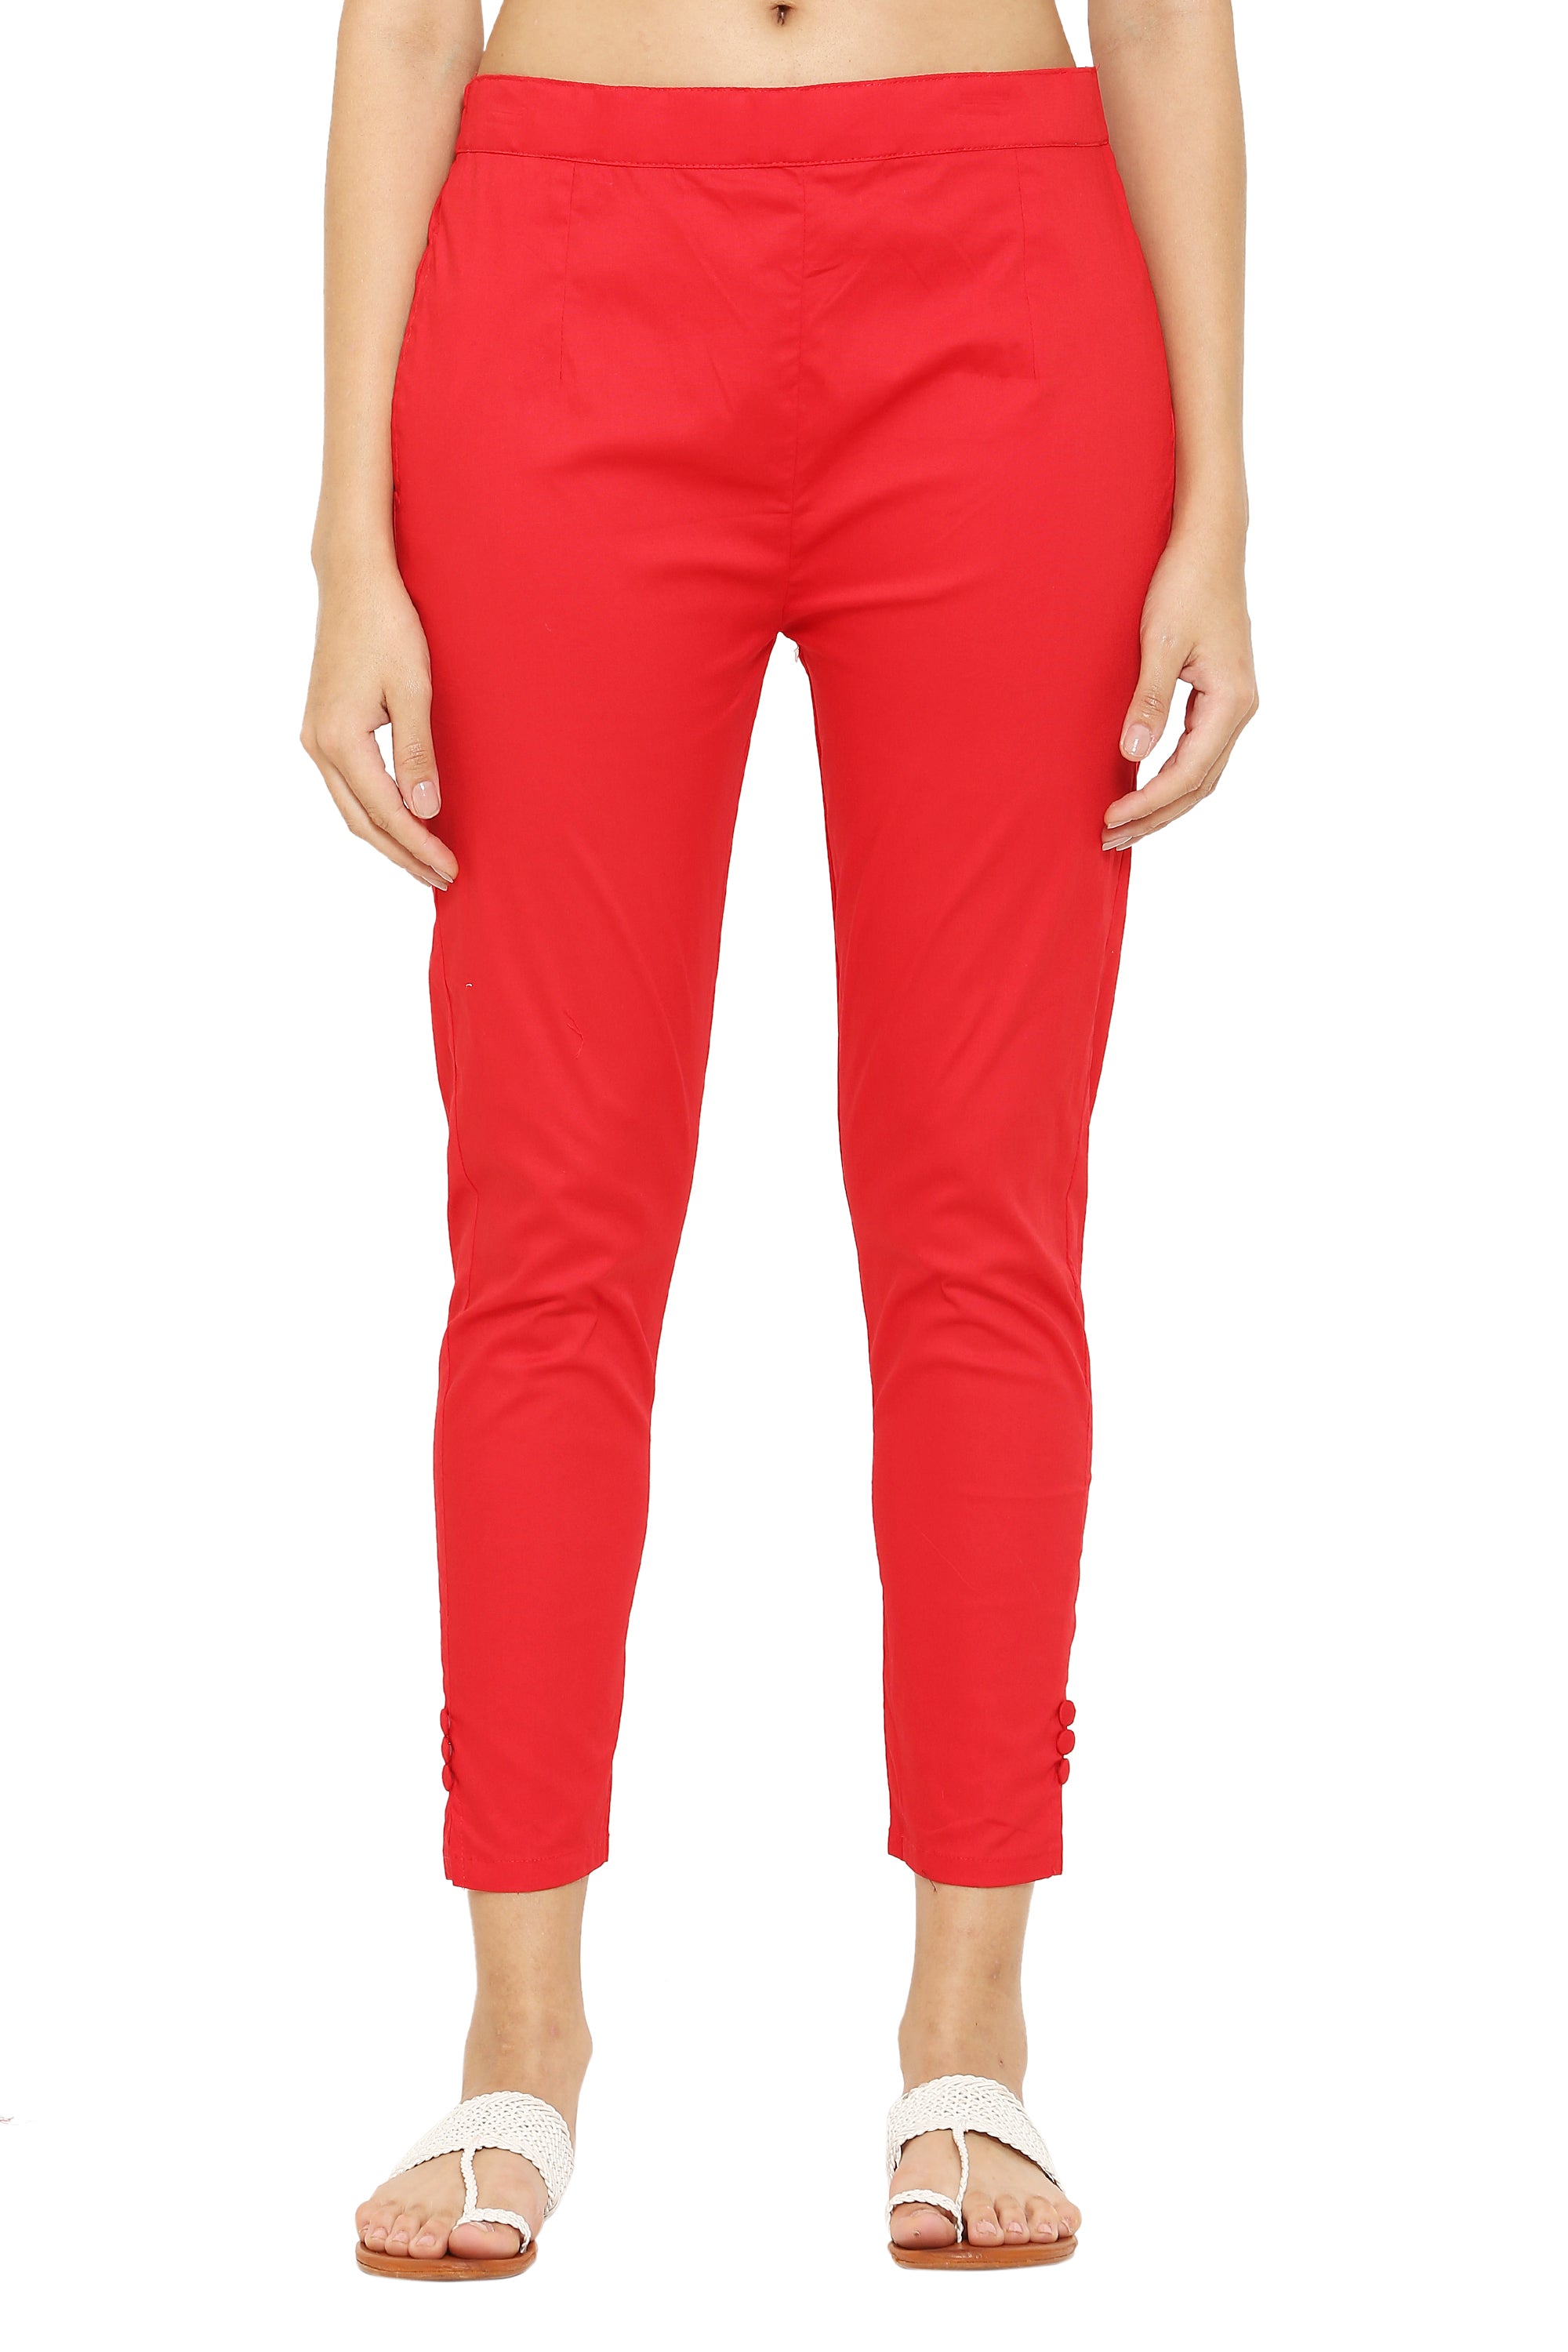 Buy Rebecca Denim Lycra Fabric Pants Price for Women - Mamicha